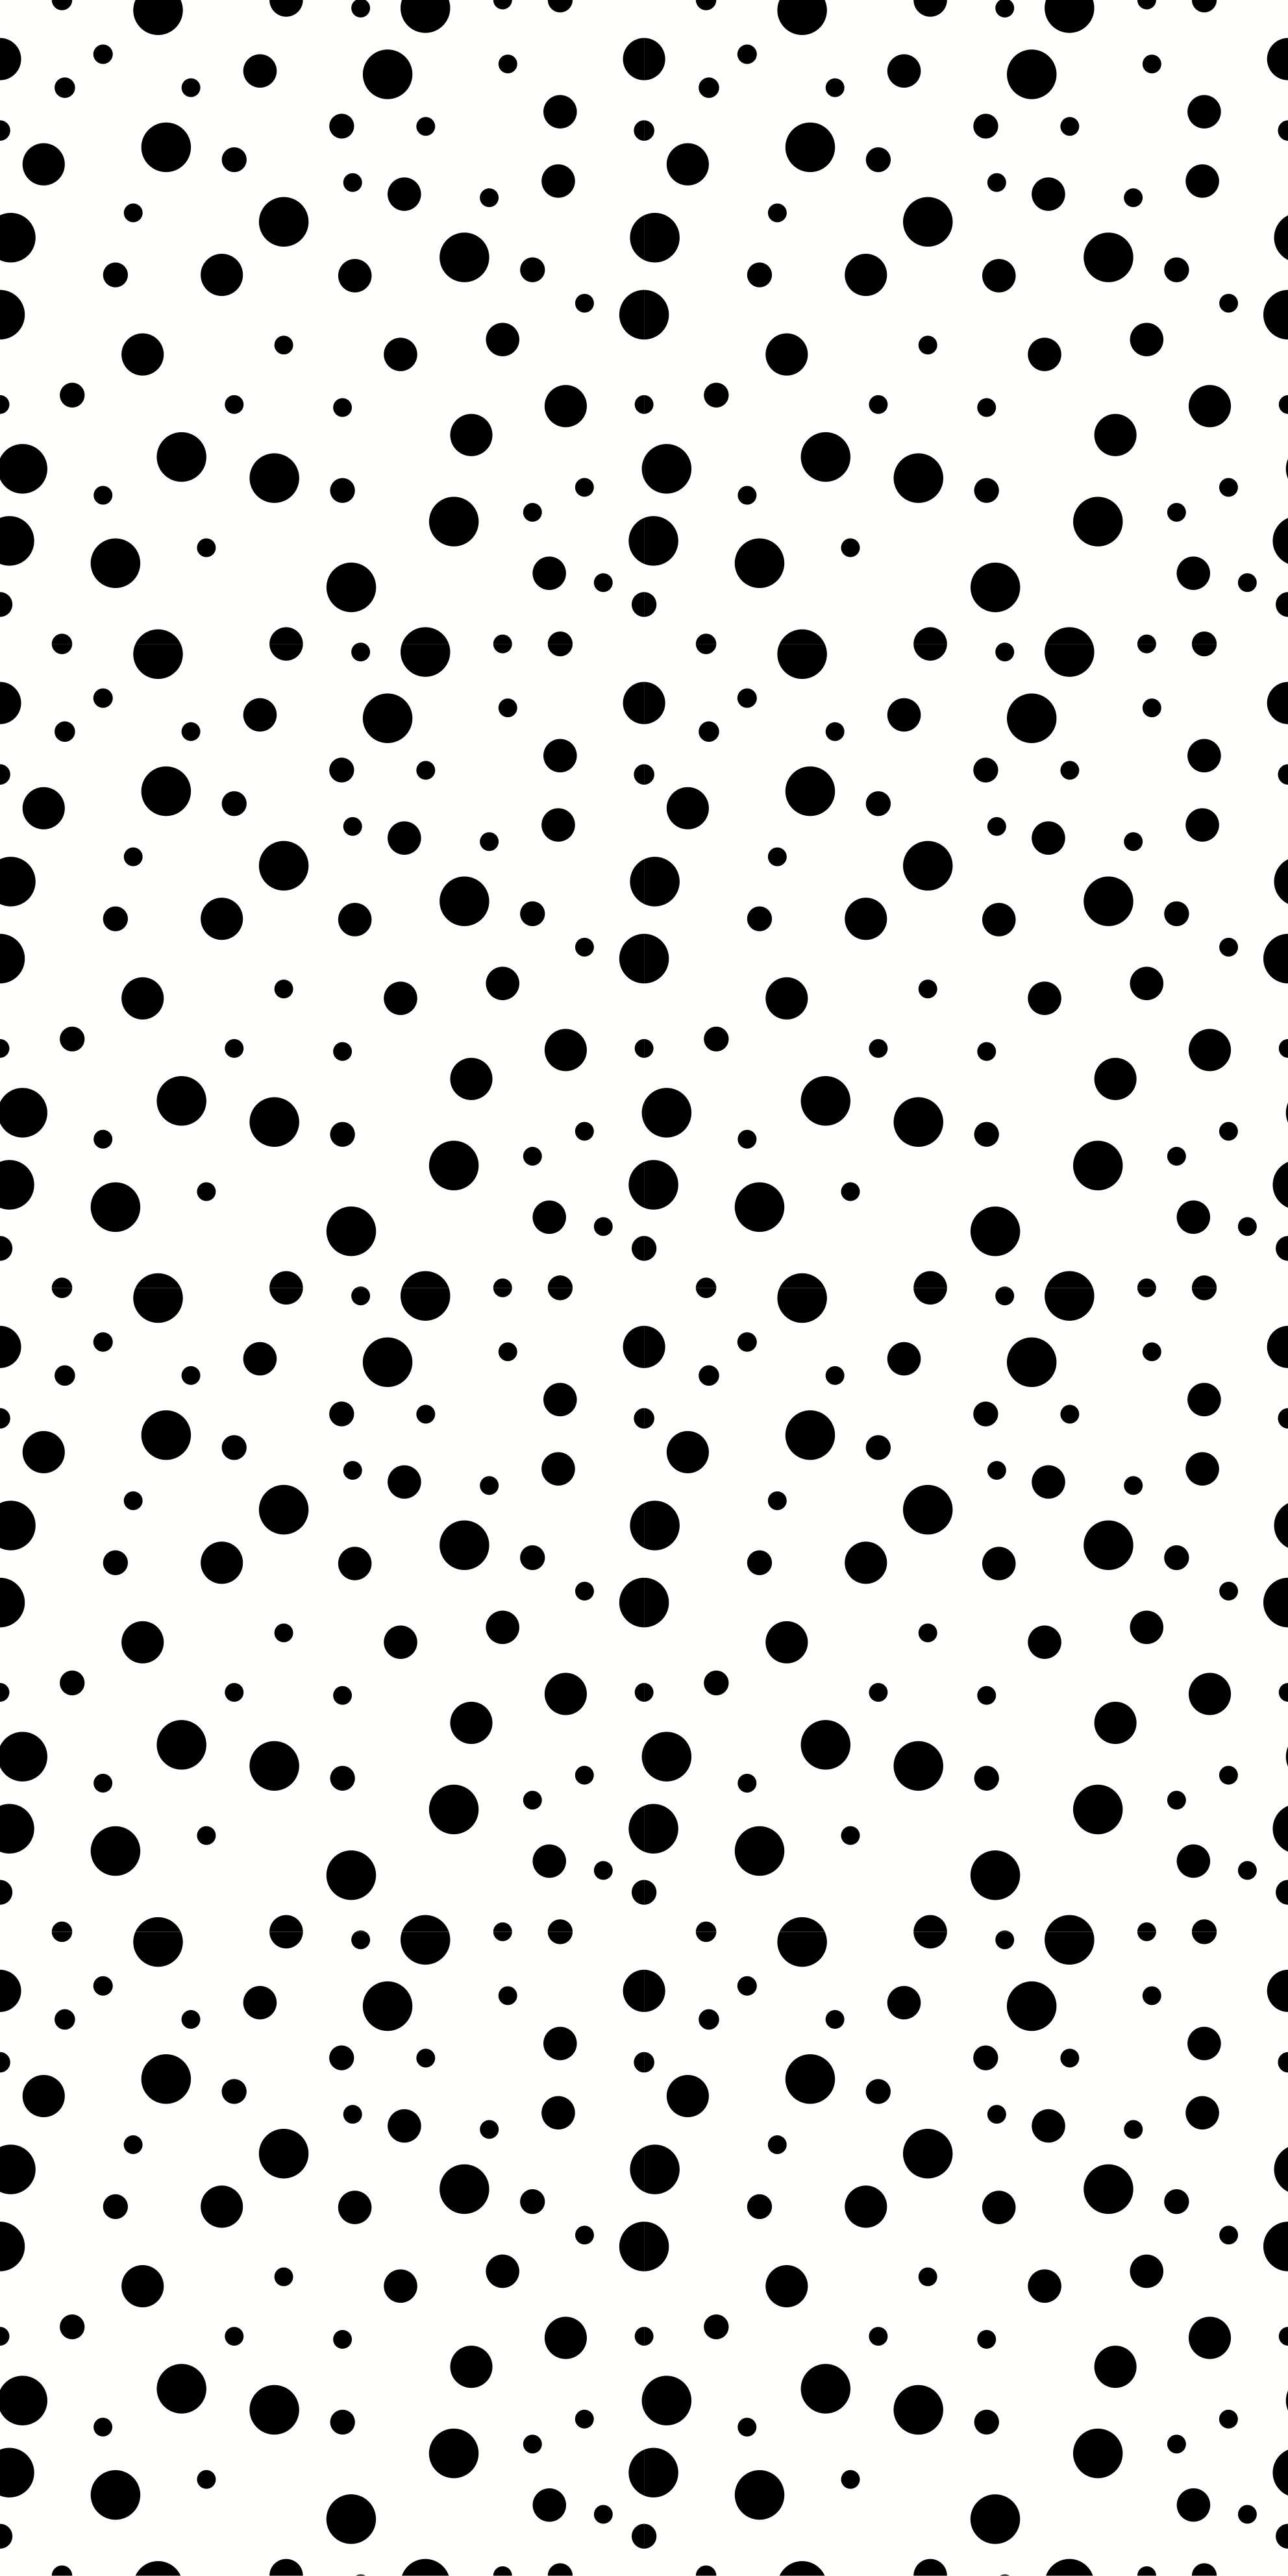 Black polka dot background Kids wallpaper  TenStickers